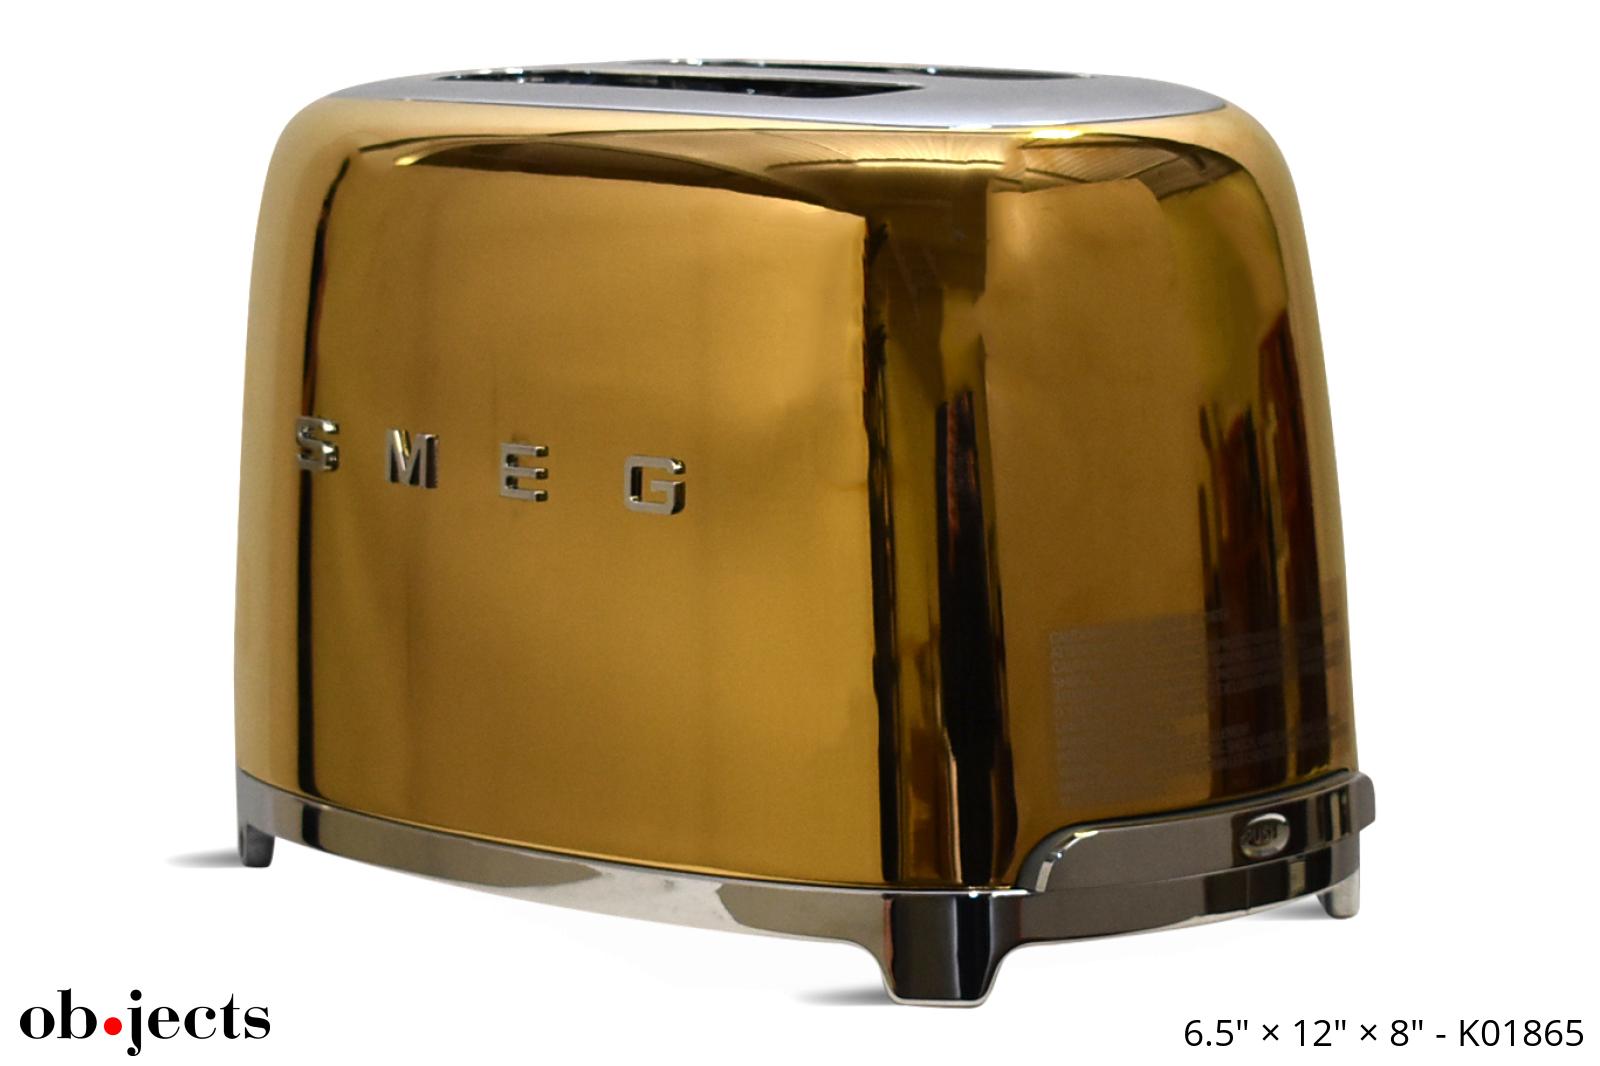 Toaster SMEG Gold 2-Slice